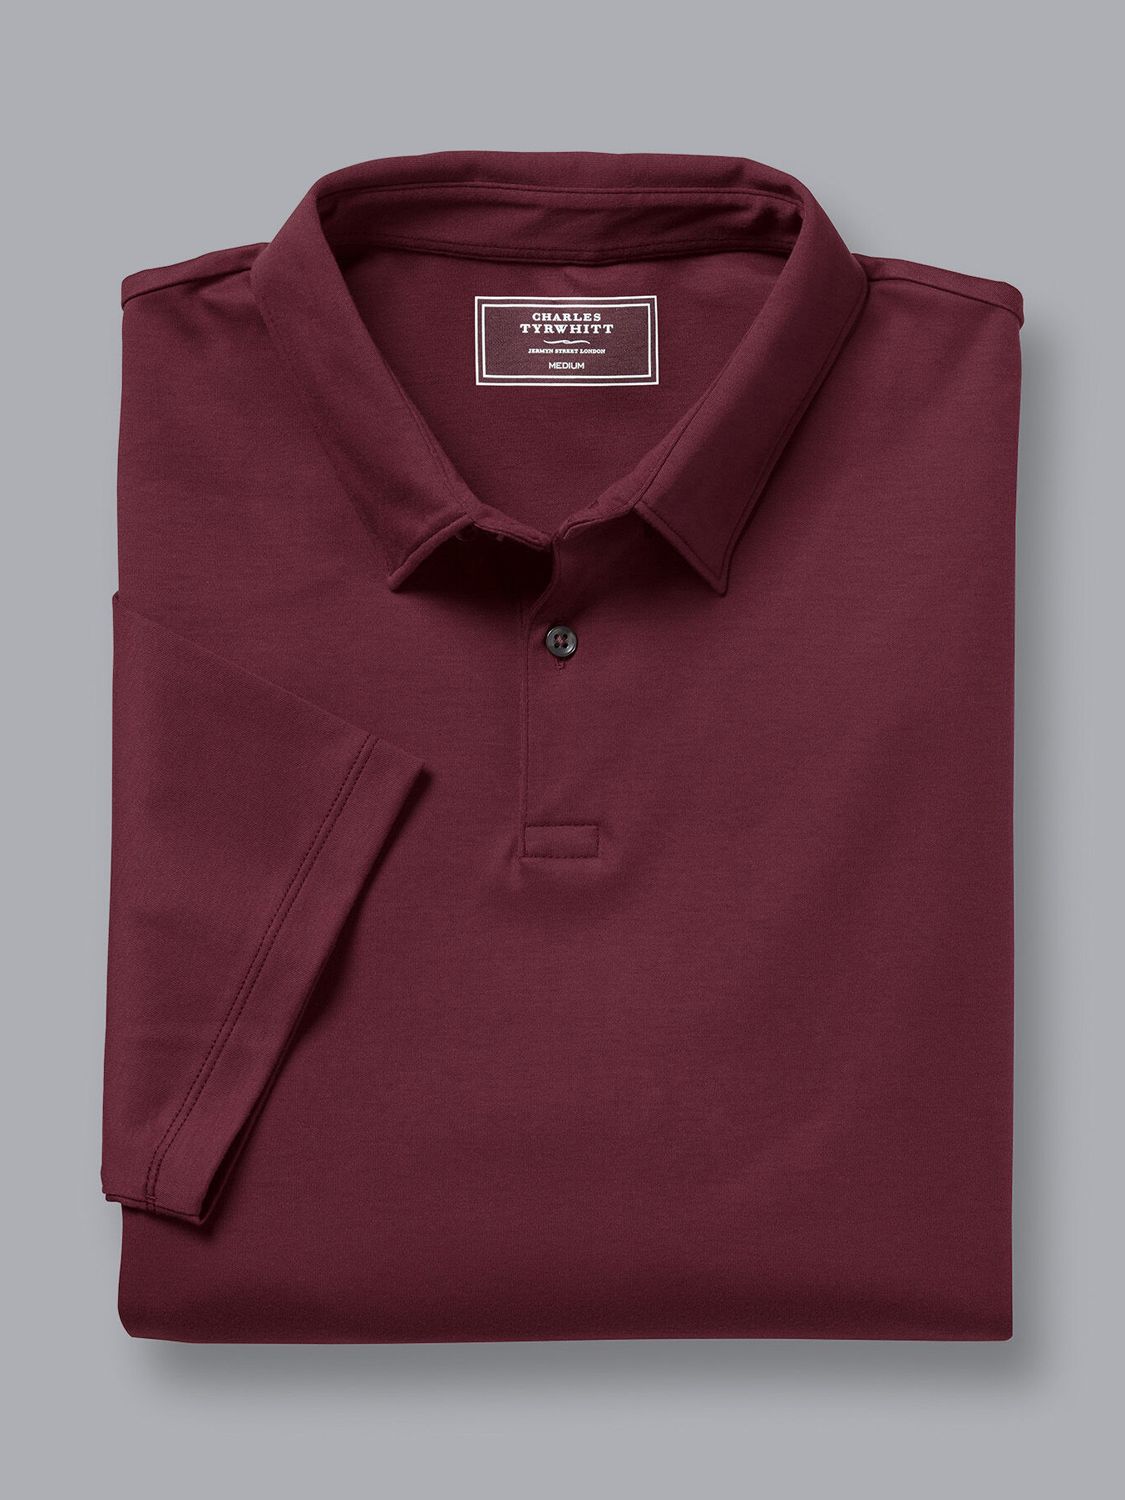 Charles Tyrwhitt Smart Jersey Short Sleeve Polo, Wine Red, XS